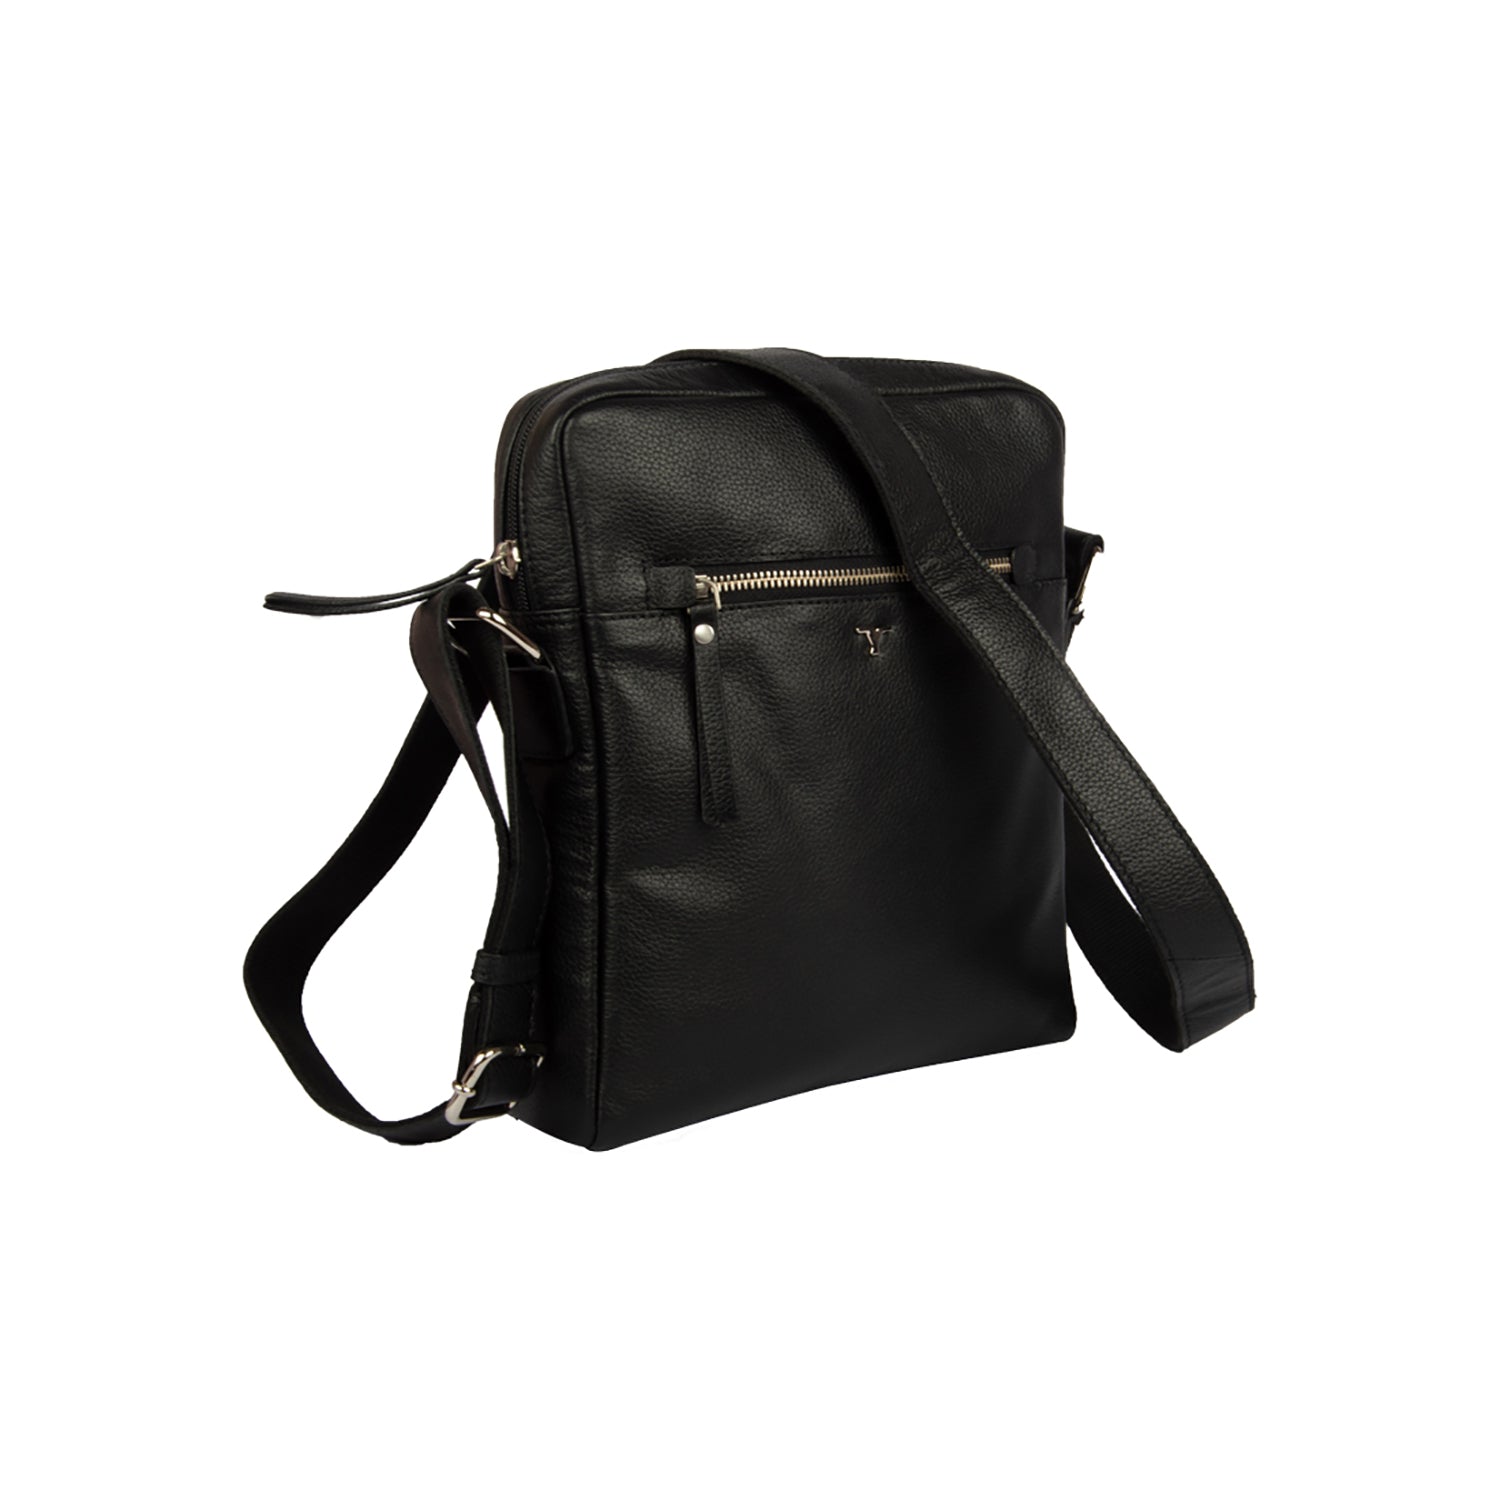 Bulchee Leather Black Messenger Bag MHBL906.1